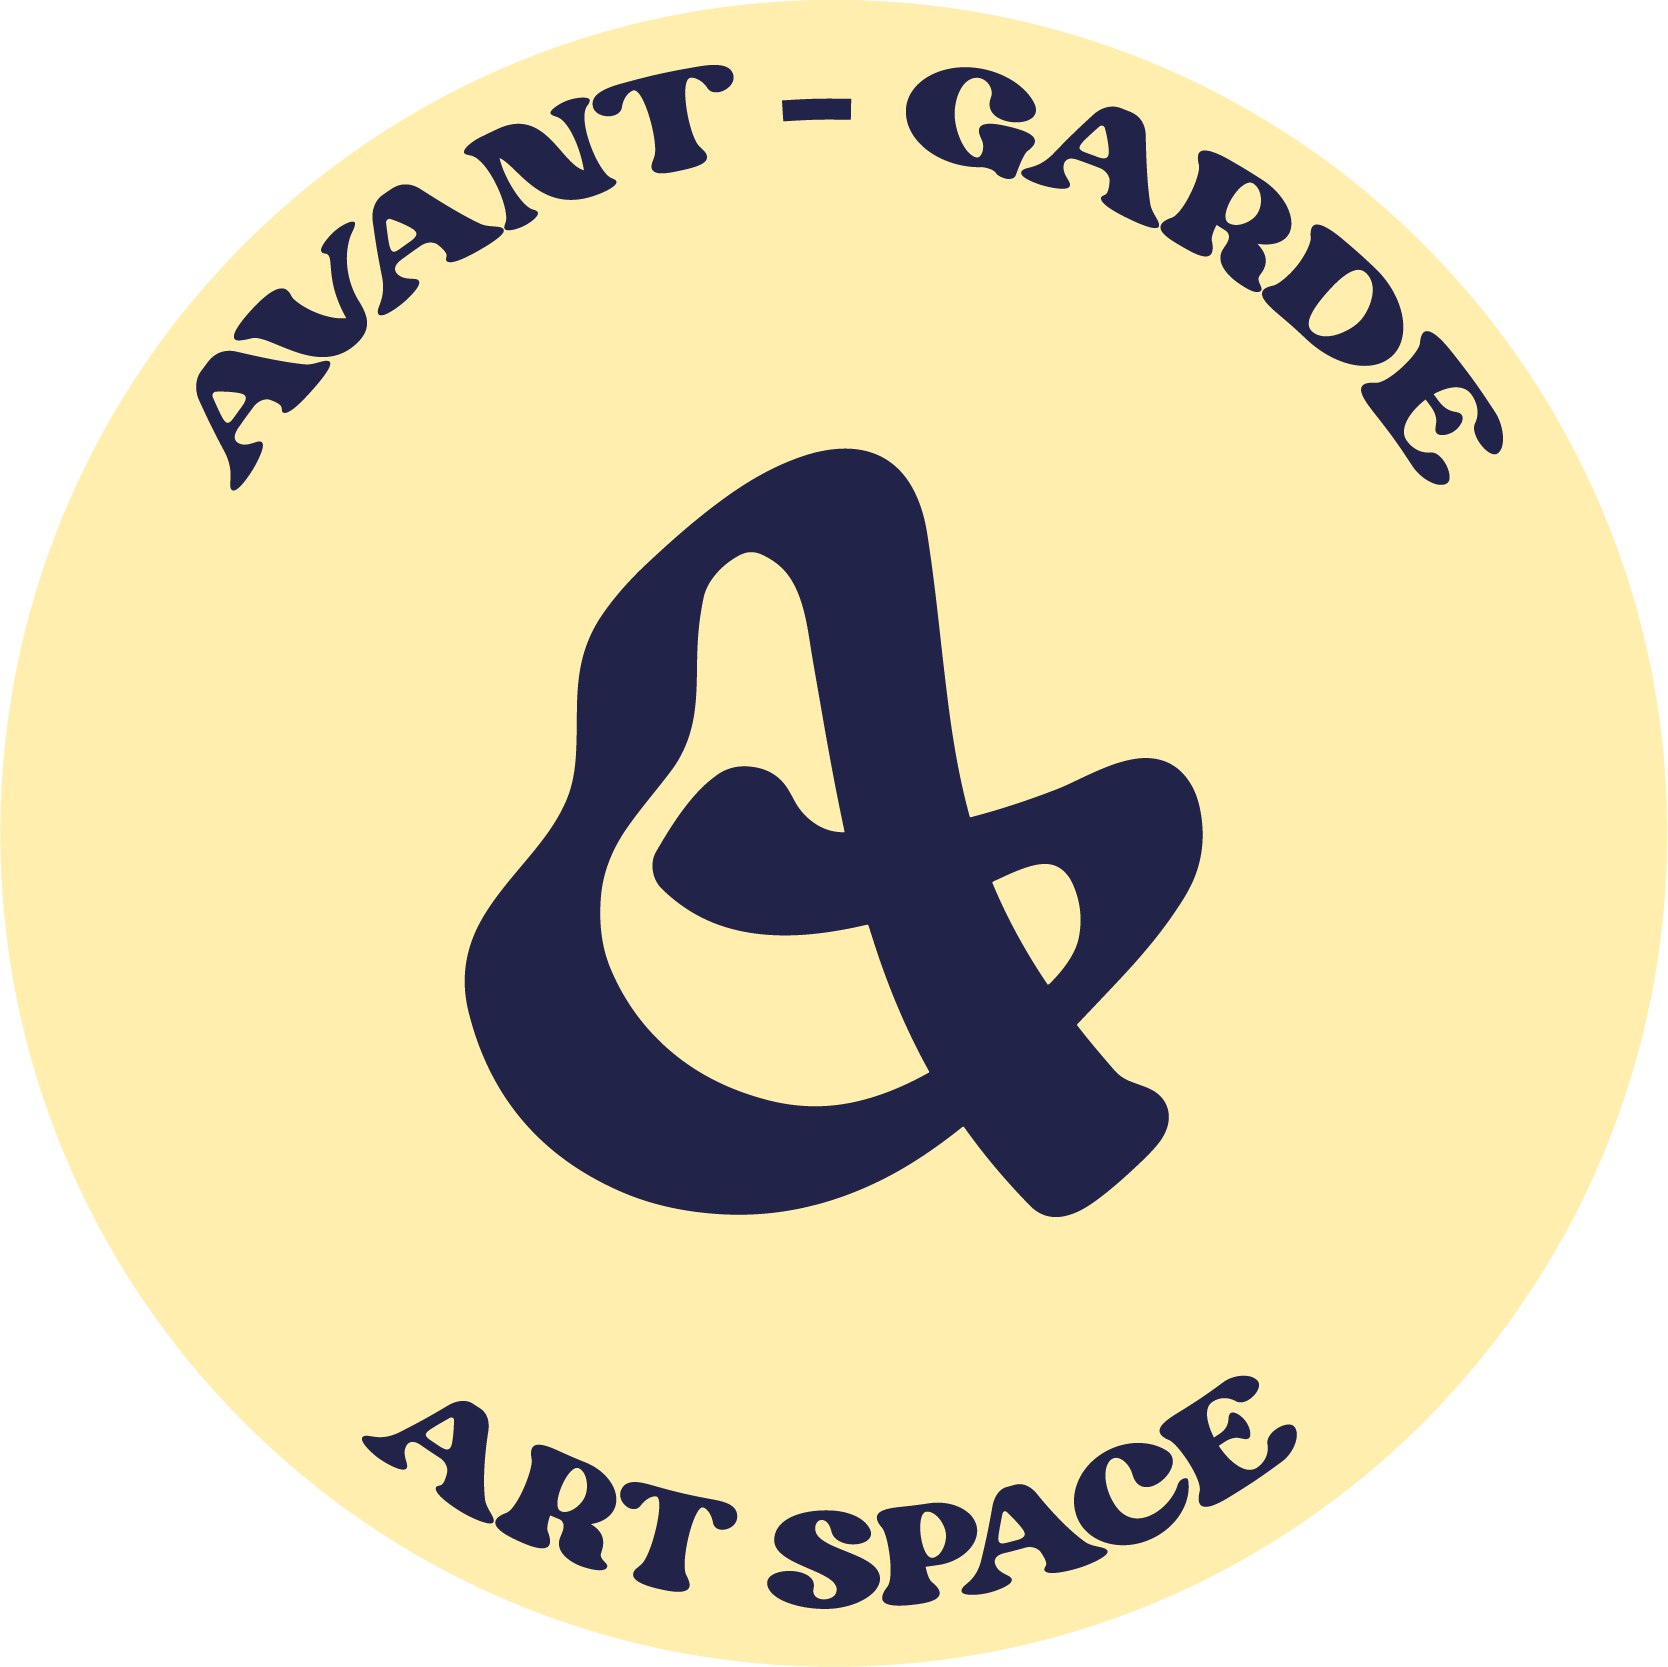 Avant-Garde Art Space (Katong Shopping Centre) - Dine, Shop, Earn